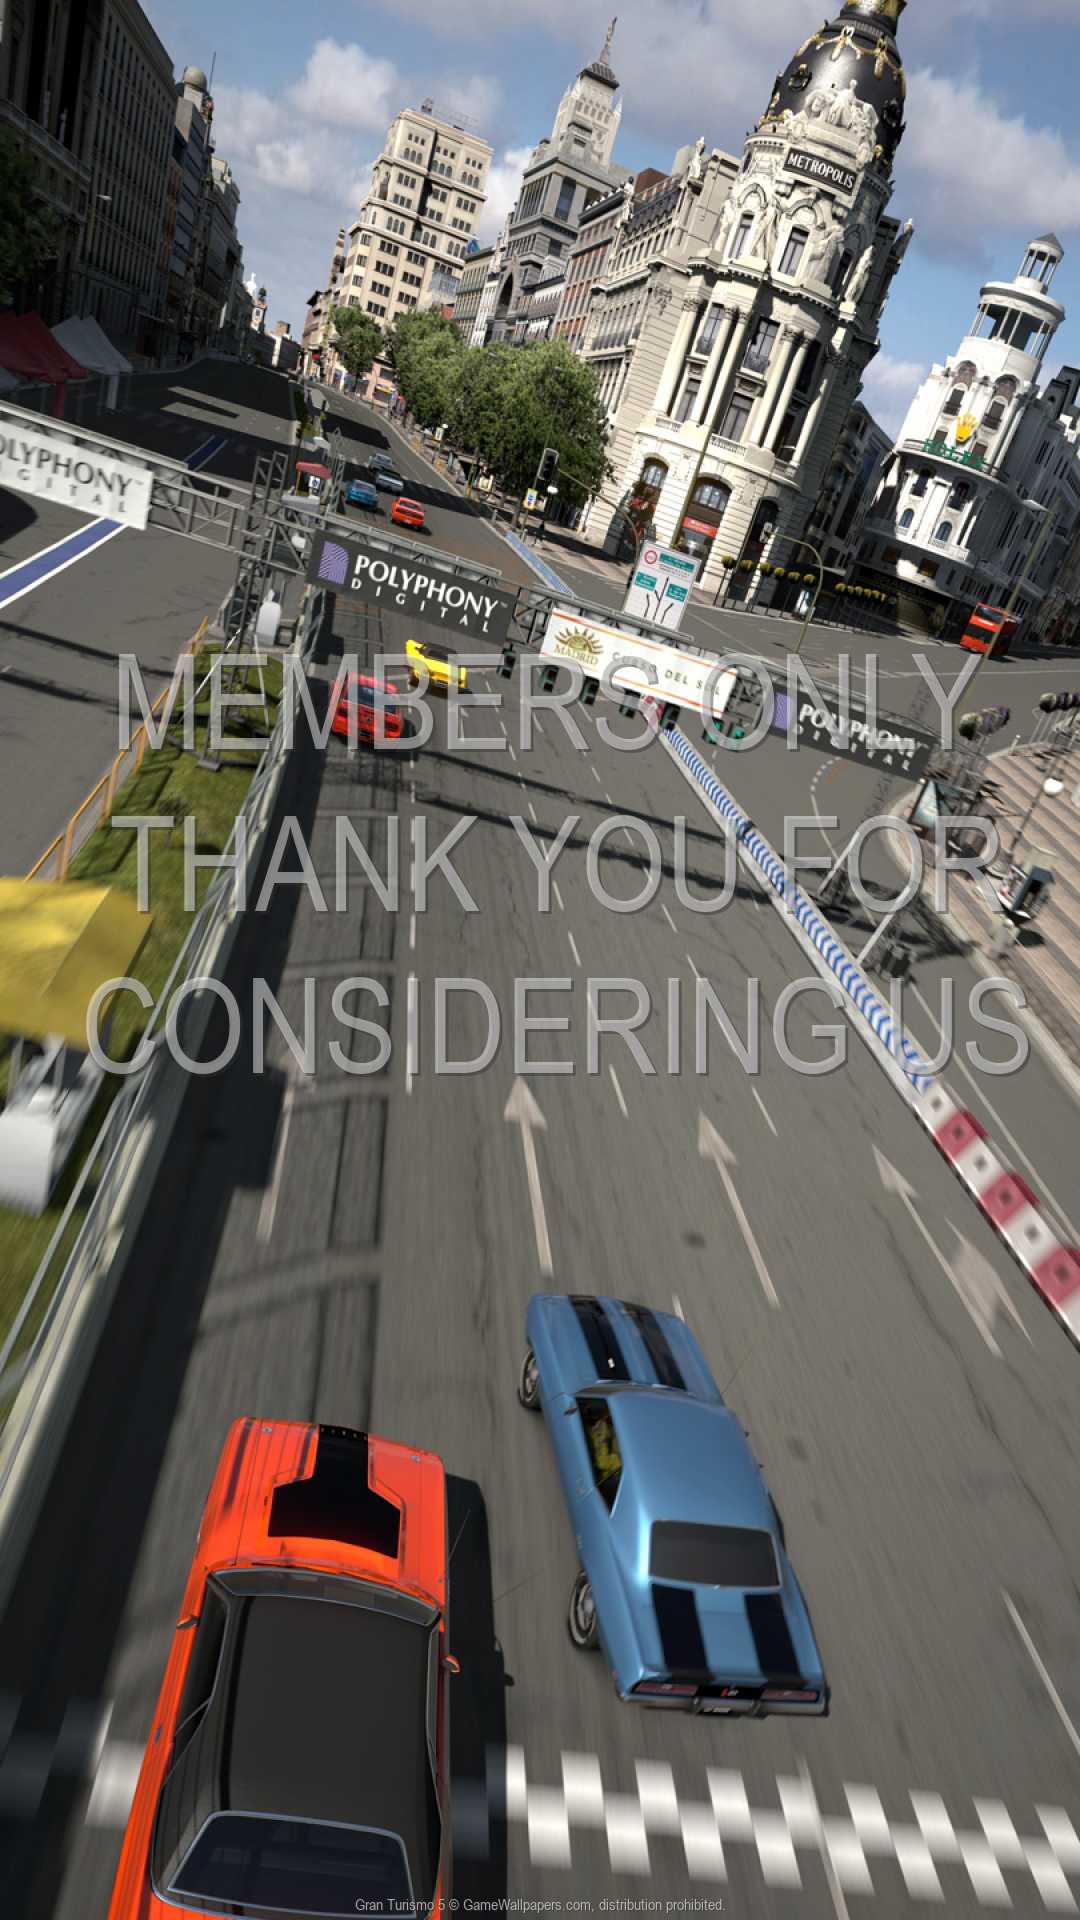 Gran Turismo 5 1080p%20Vertical Mobile wallpaper or background 13